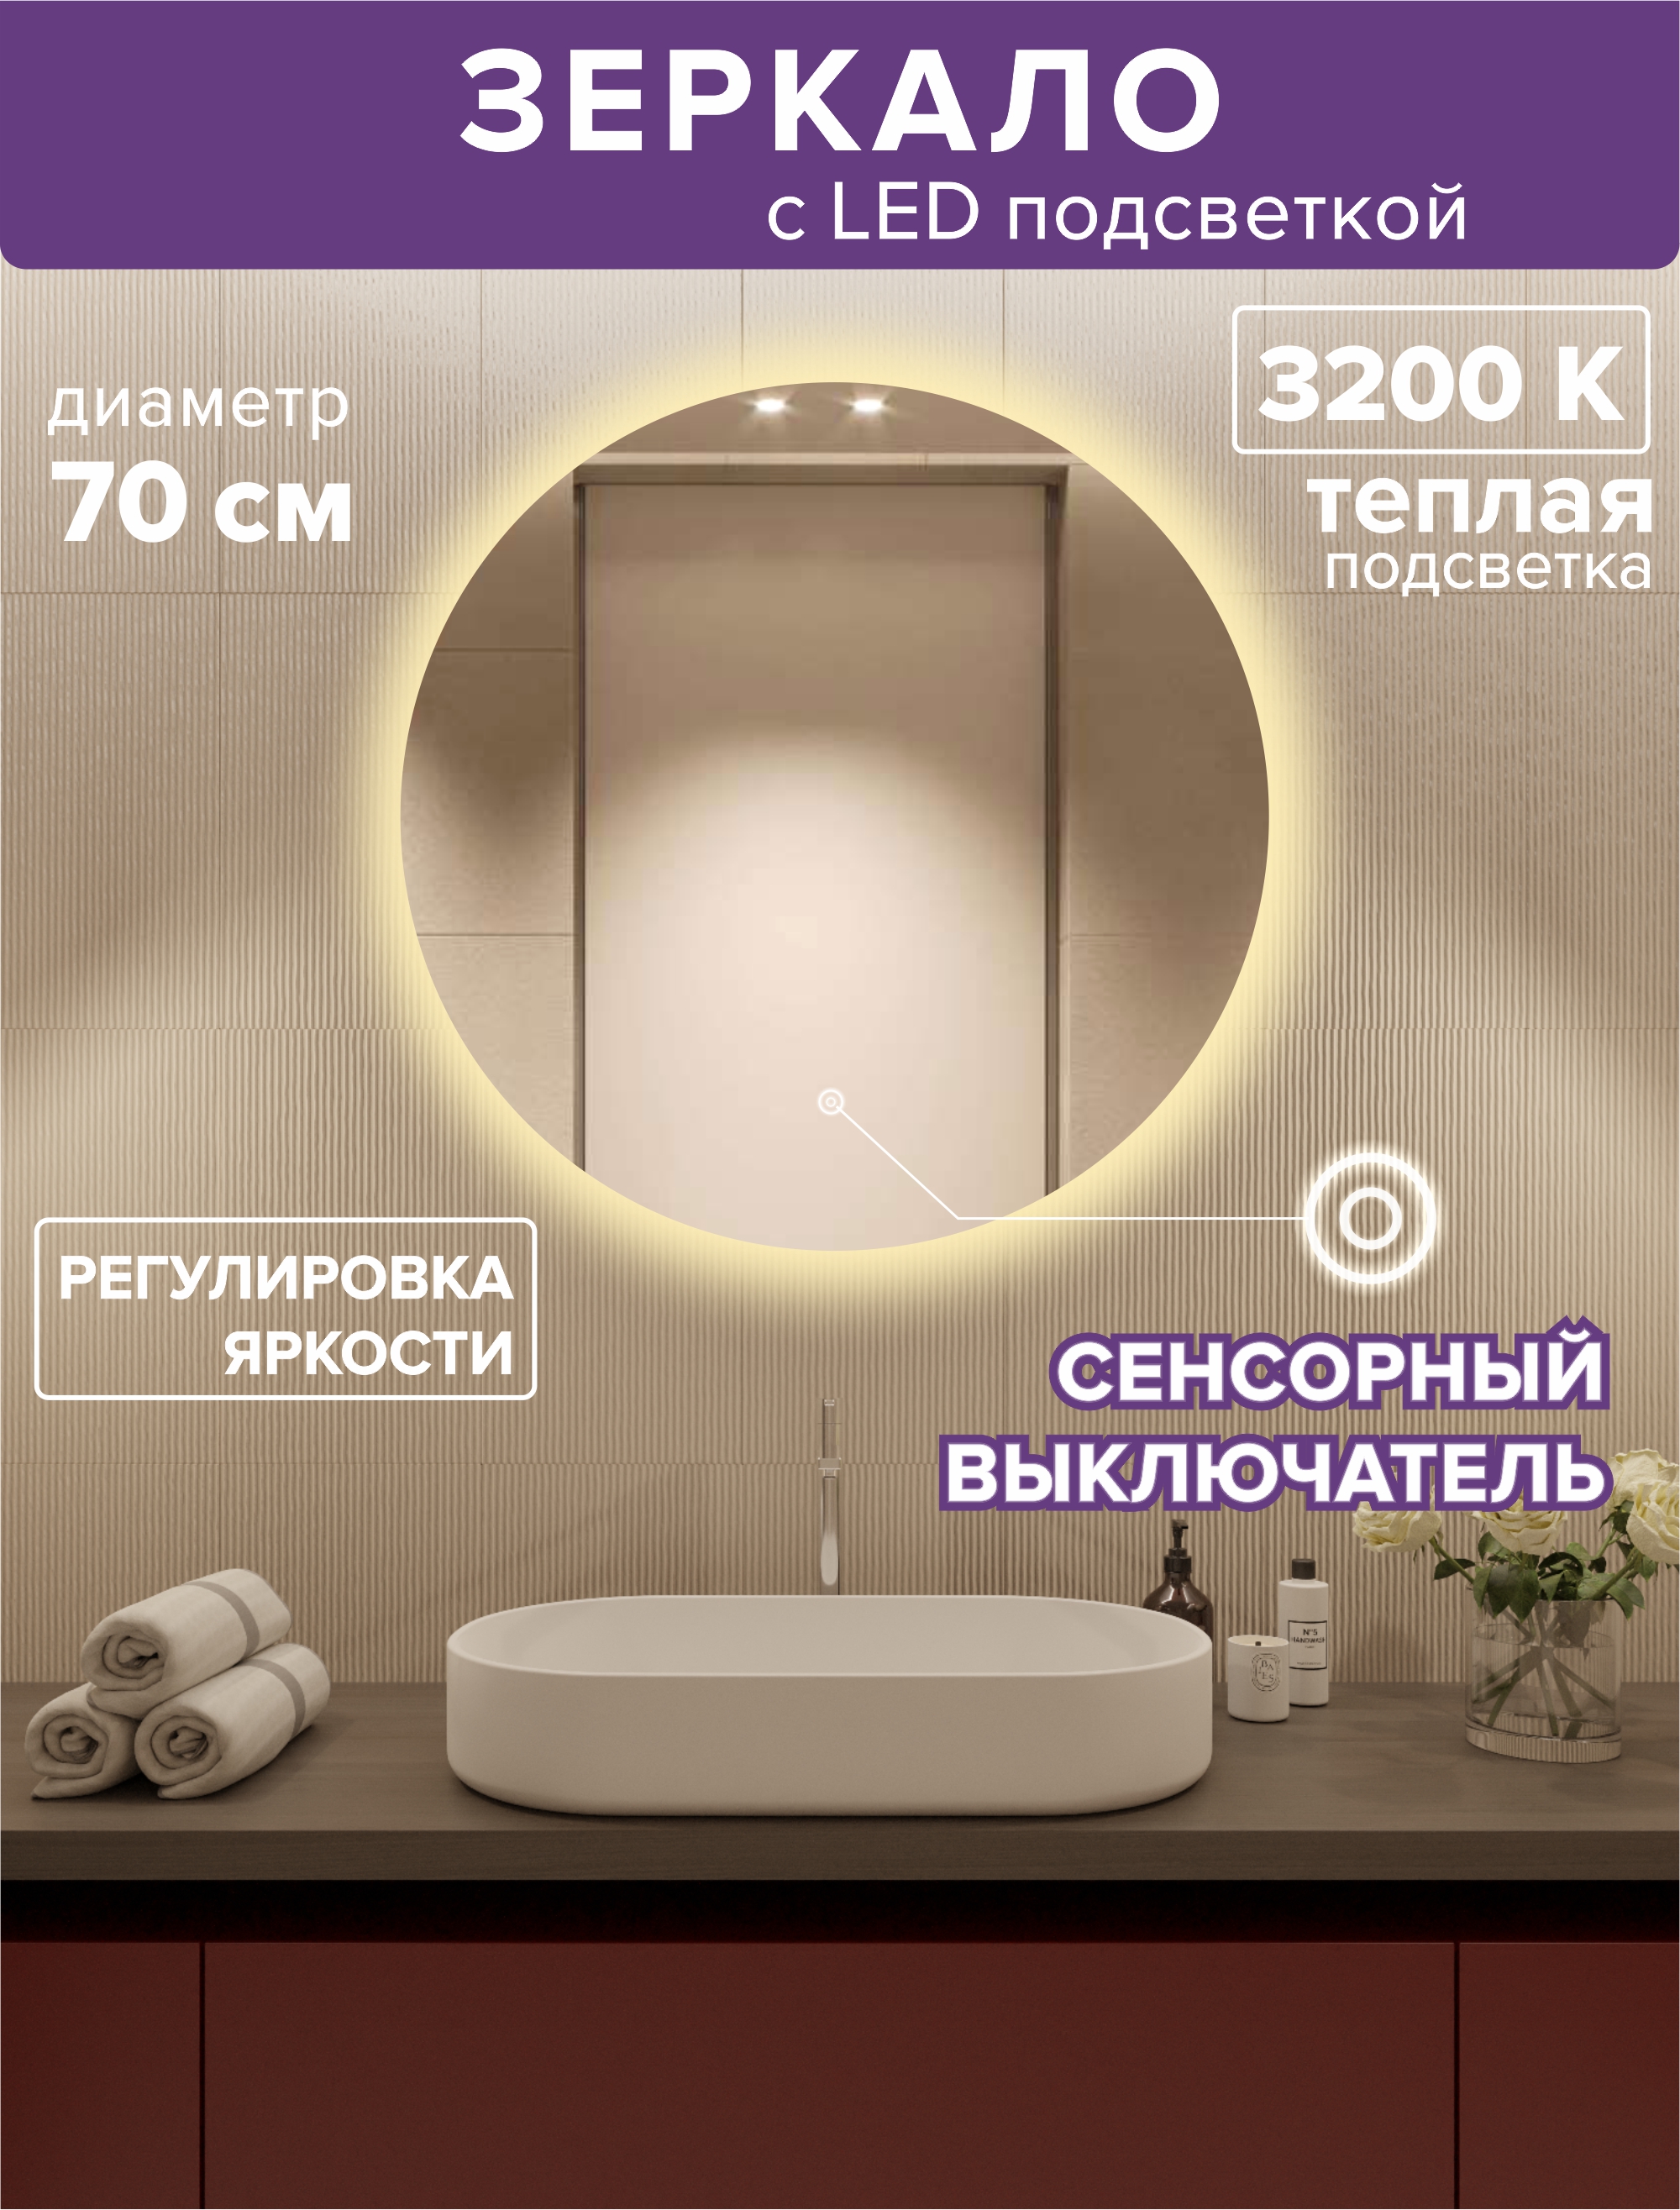 Зеркало для ванной Alfa Mirrors с теплой подсветкой 3200К круглое 70см, арт. Na-7Na-7t